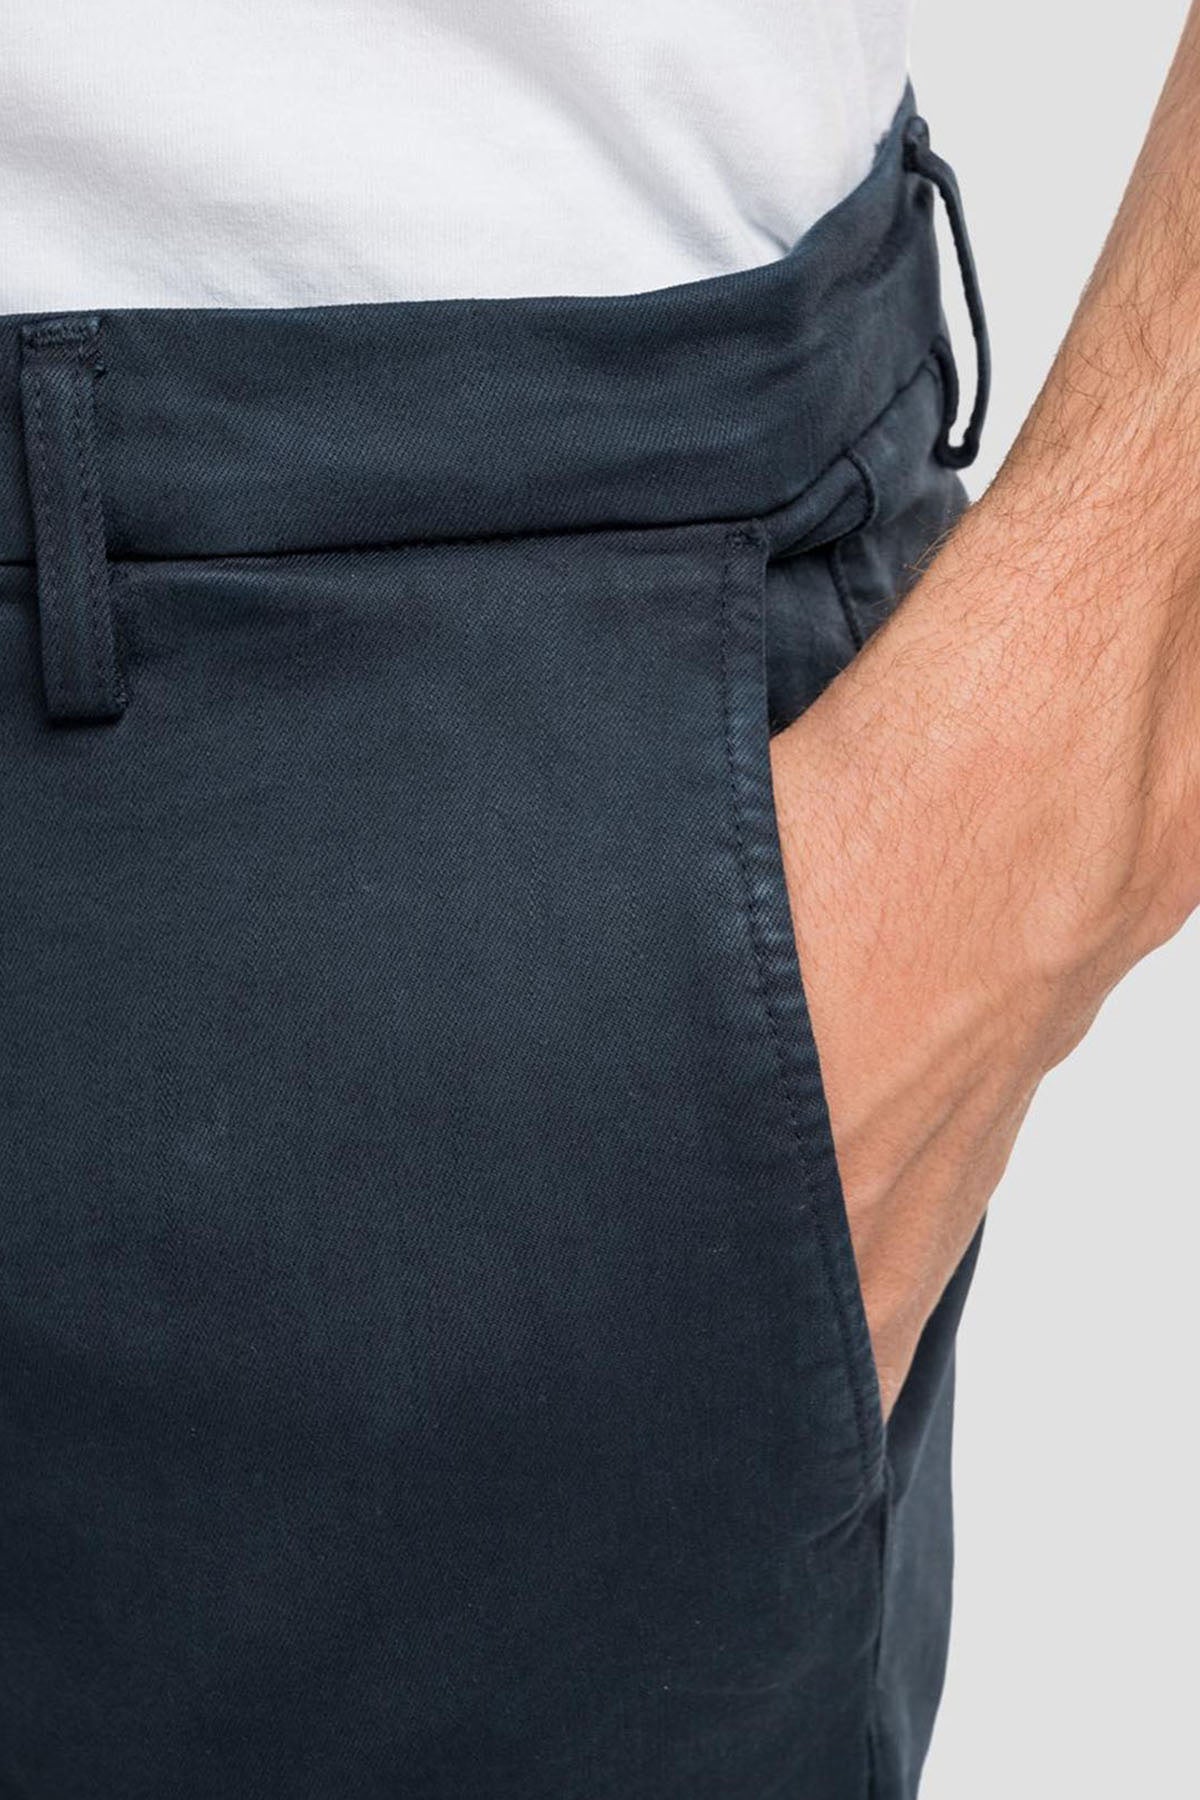 Replay Benni Regular Fit Hyperflex Extra Light Chino Pantolon-Libas Trendy Fashion Store